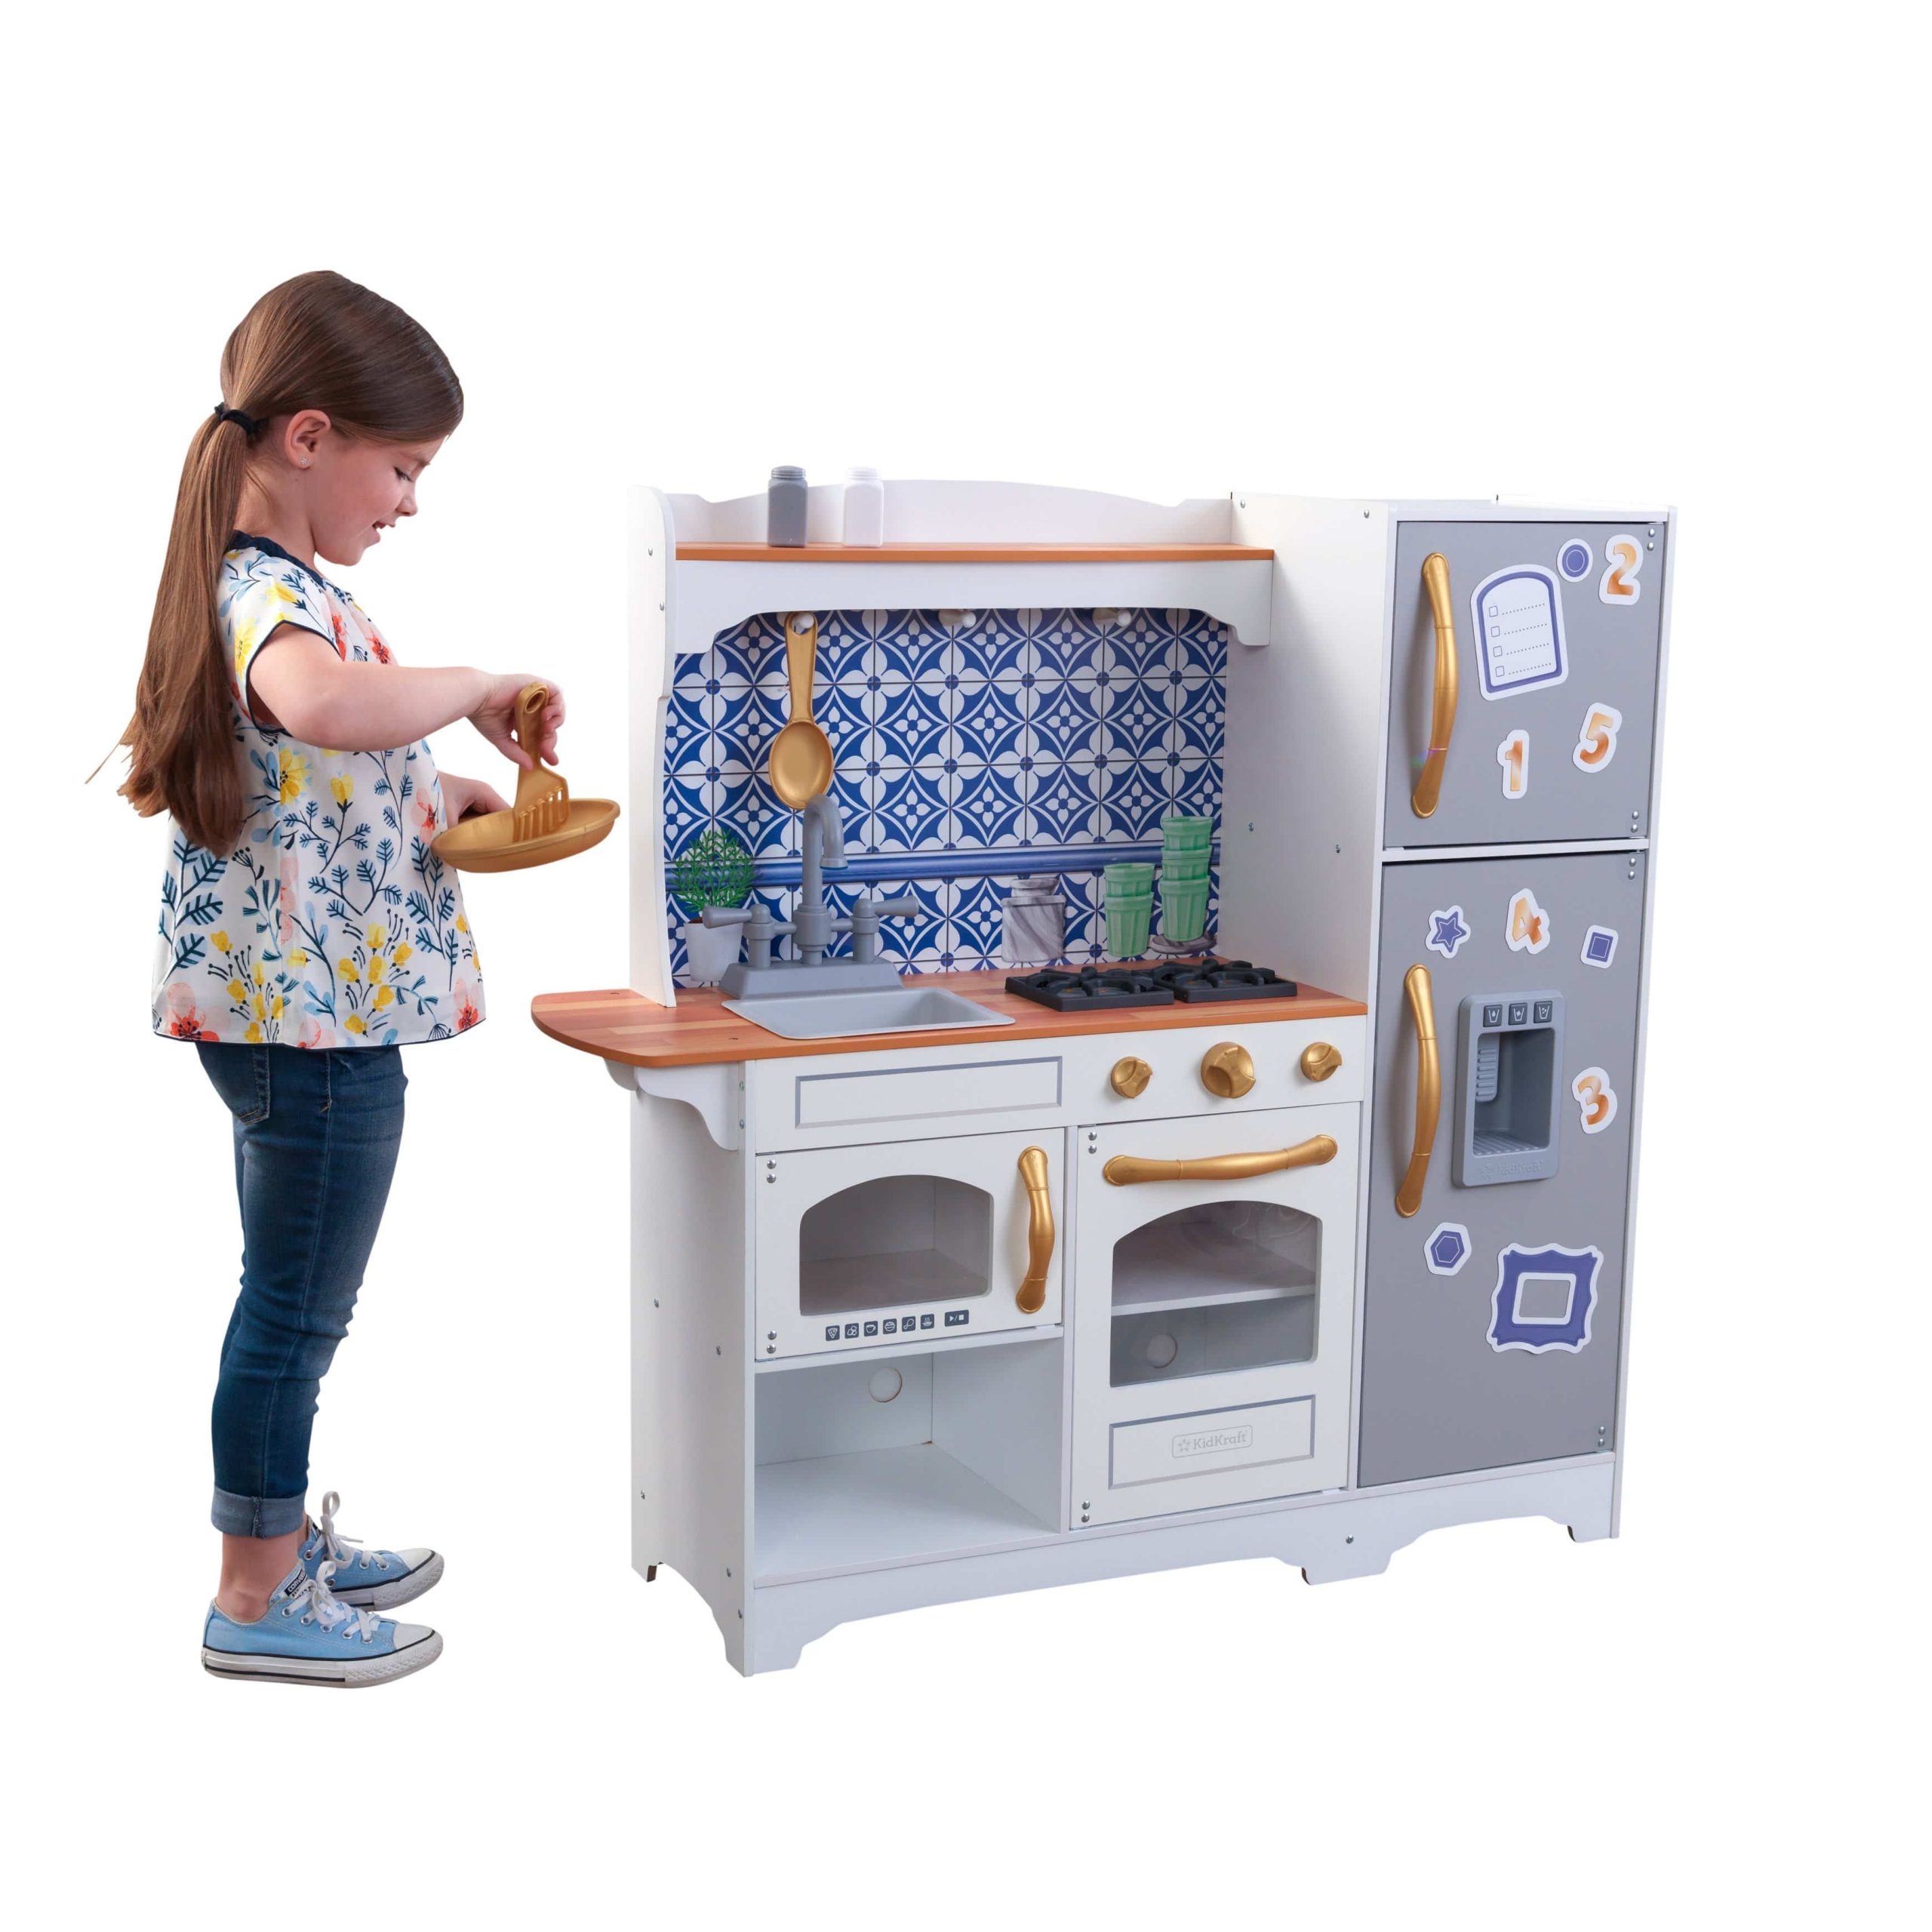 مطبخ خشب للاطفال كندر كرافت KidKraft Mosaic Magnetic Play Kitchen